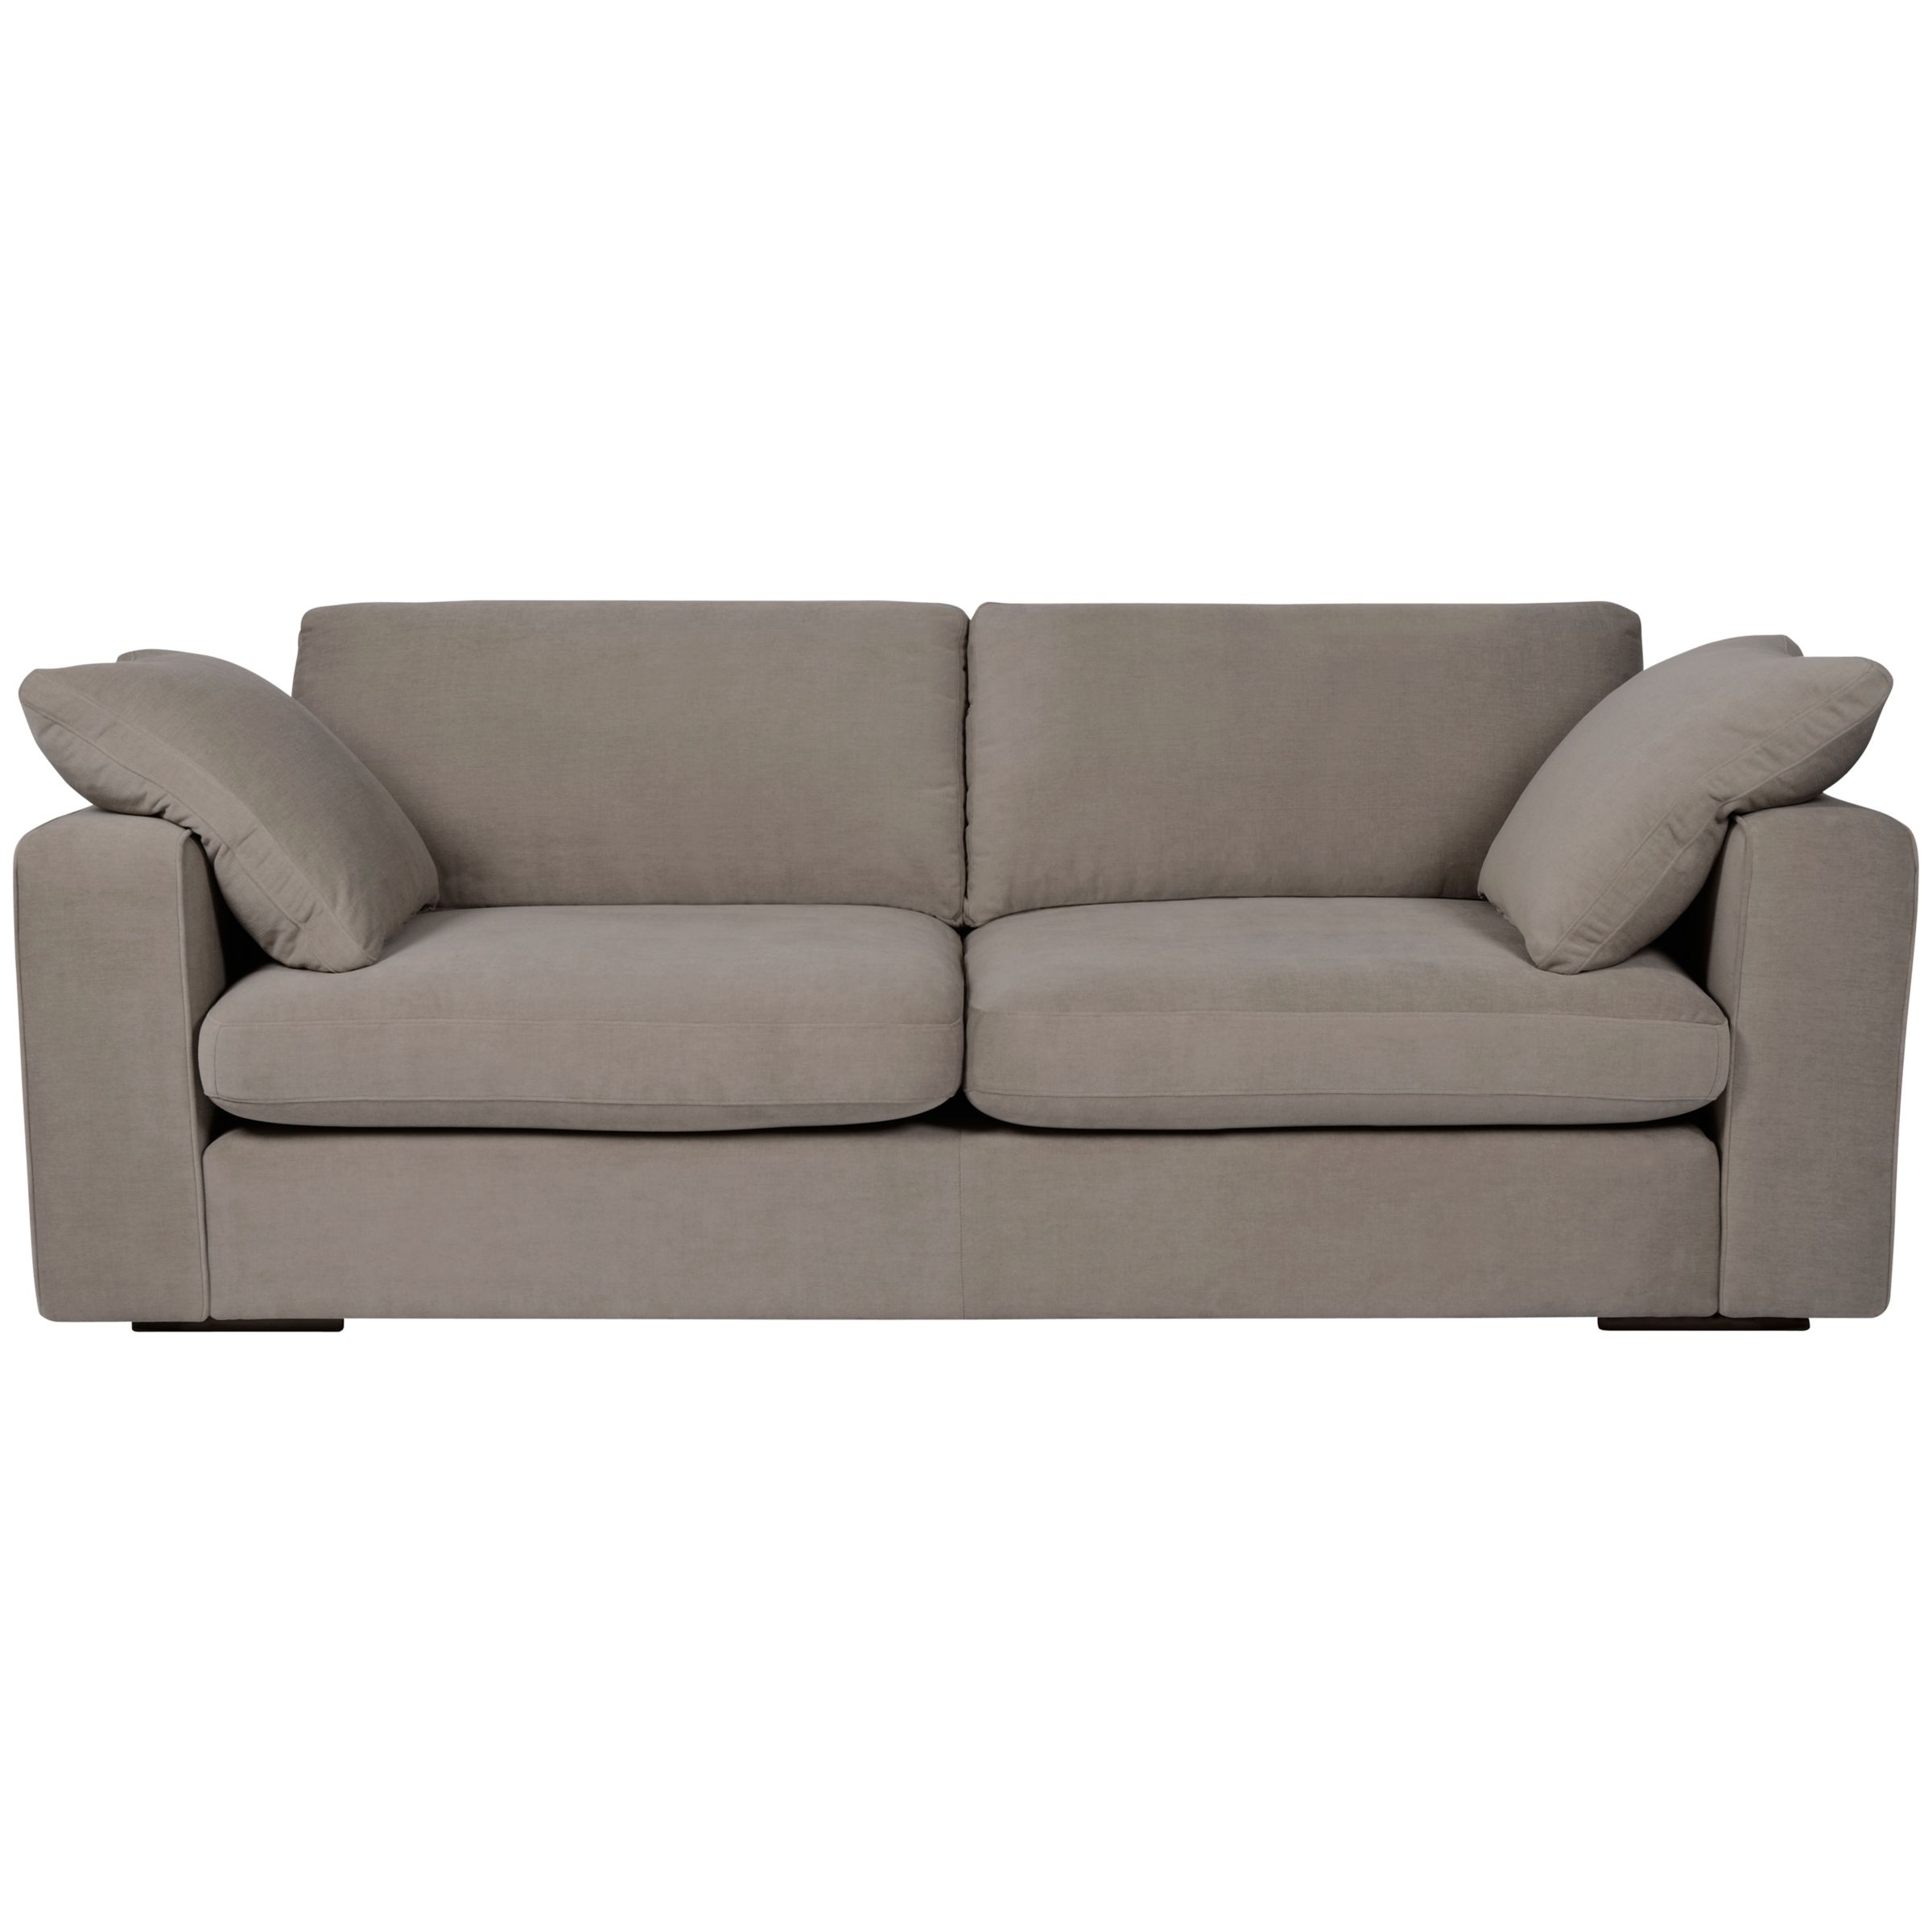 John Lewis Jones Options 2 Square Arm Grand Sofa, Mercury, width 228cm